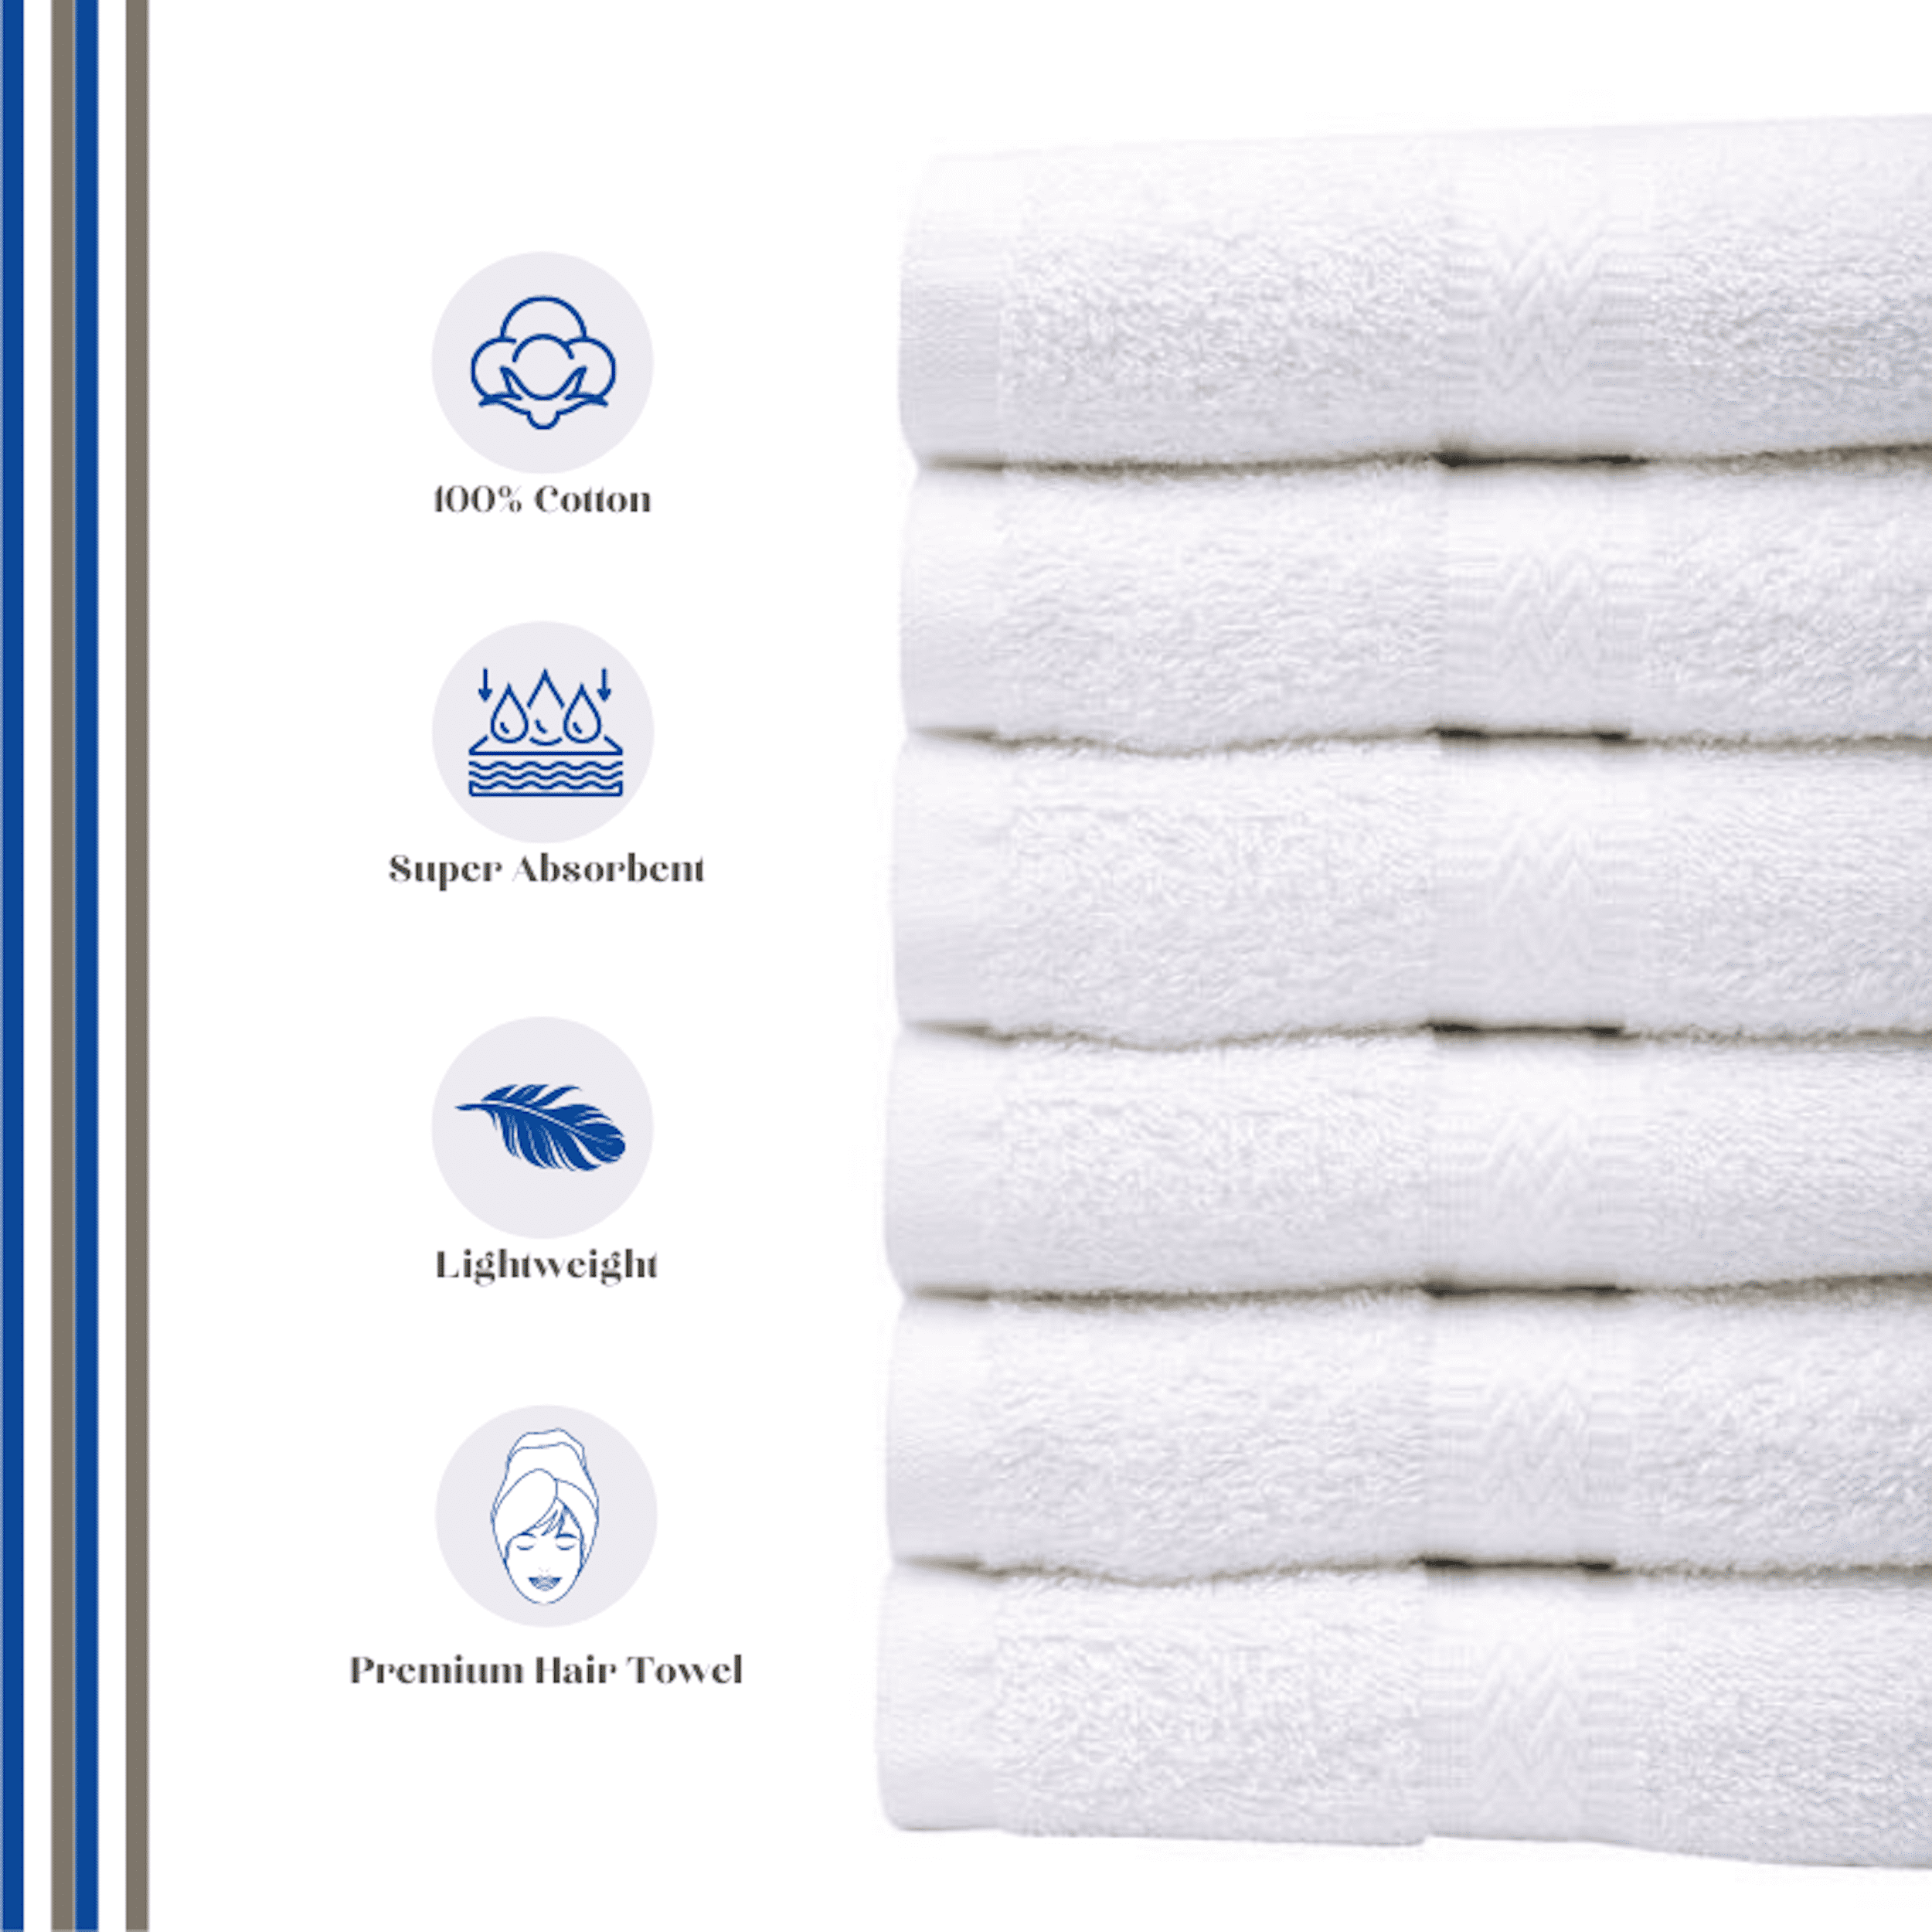 Bath Towels 20x40 4.00 lb Wt, 100% Cotton Economy 10's cheaper HOTEL/Motel  White, open end yarn. Starting at $8.99/Dozen